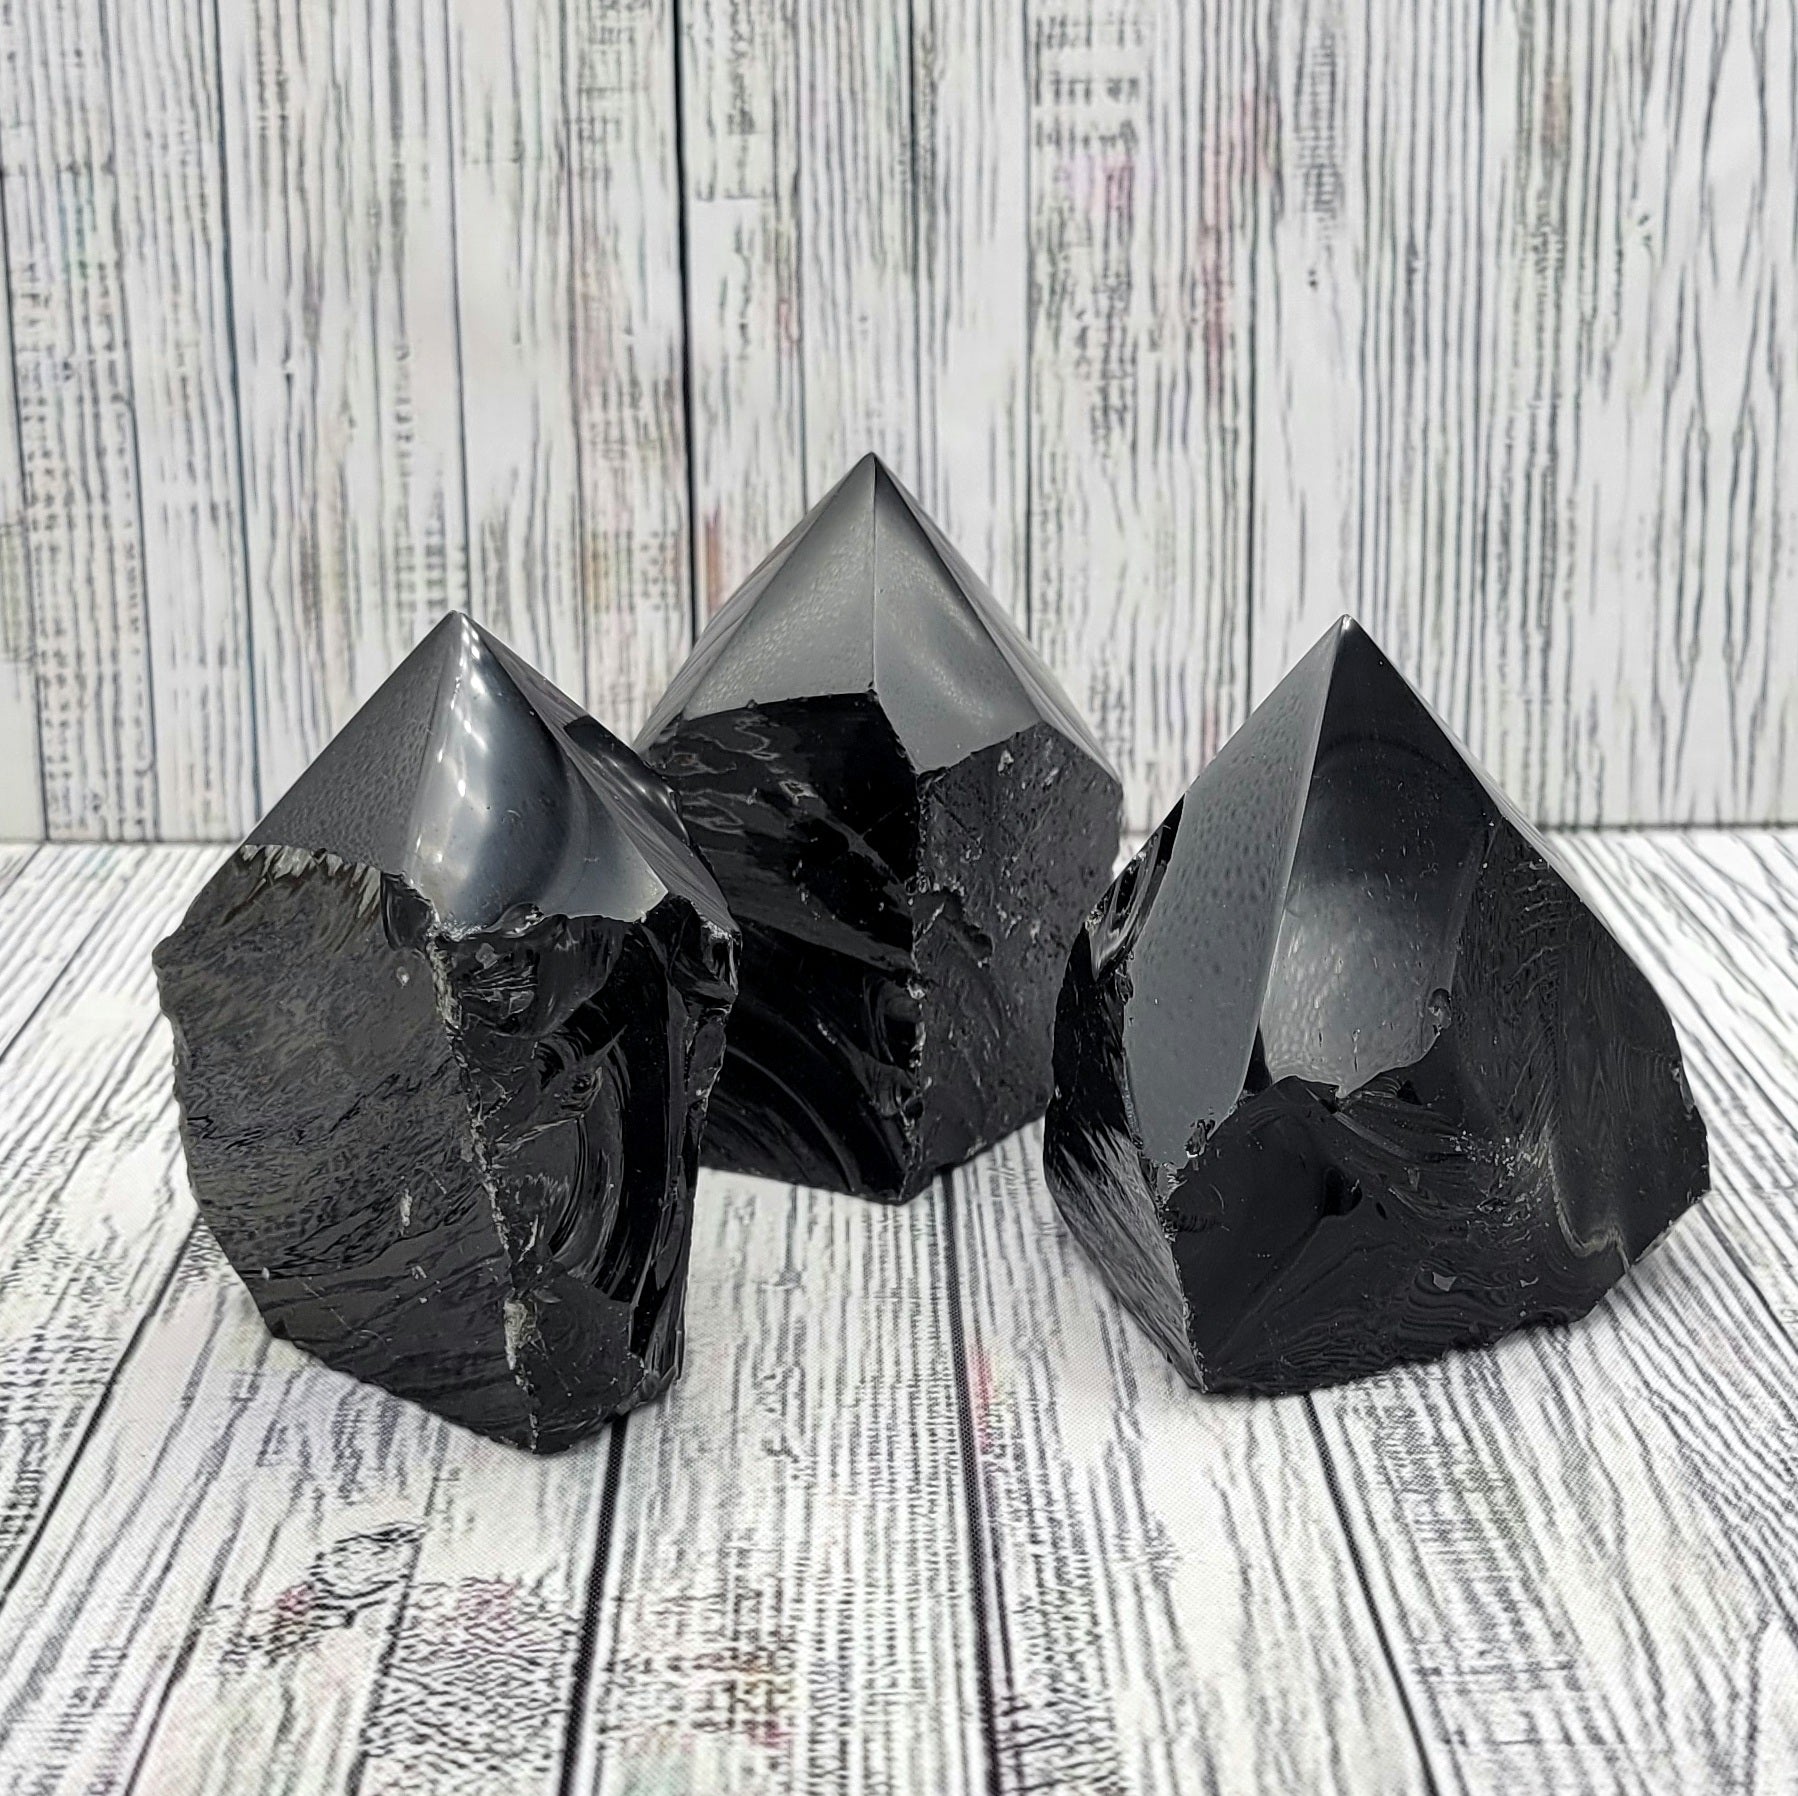 Black Obsidian Semi-Polished Point (200-300g)